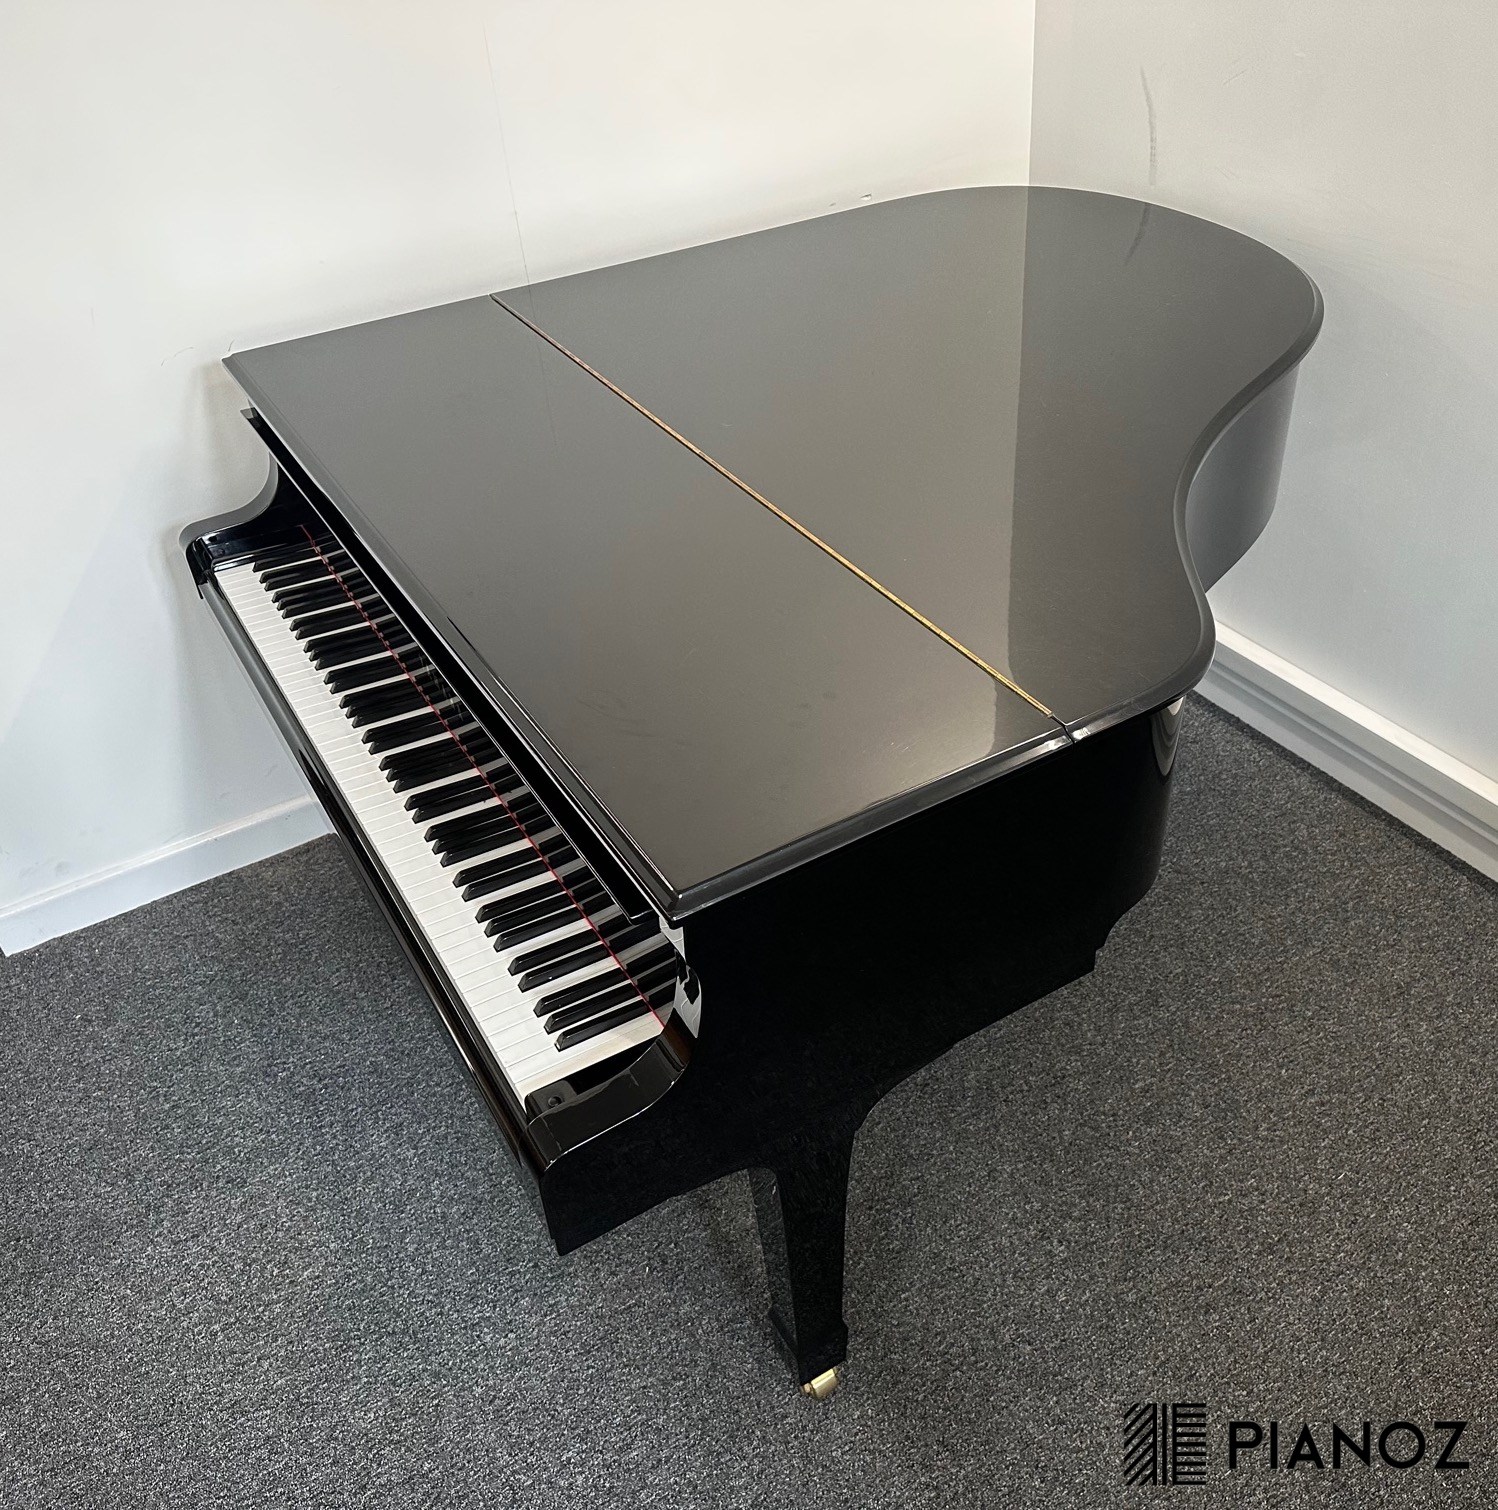 Yamaha C2 Baby Grand Piano piano for sale in UK